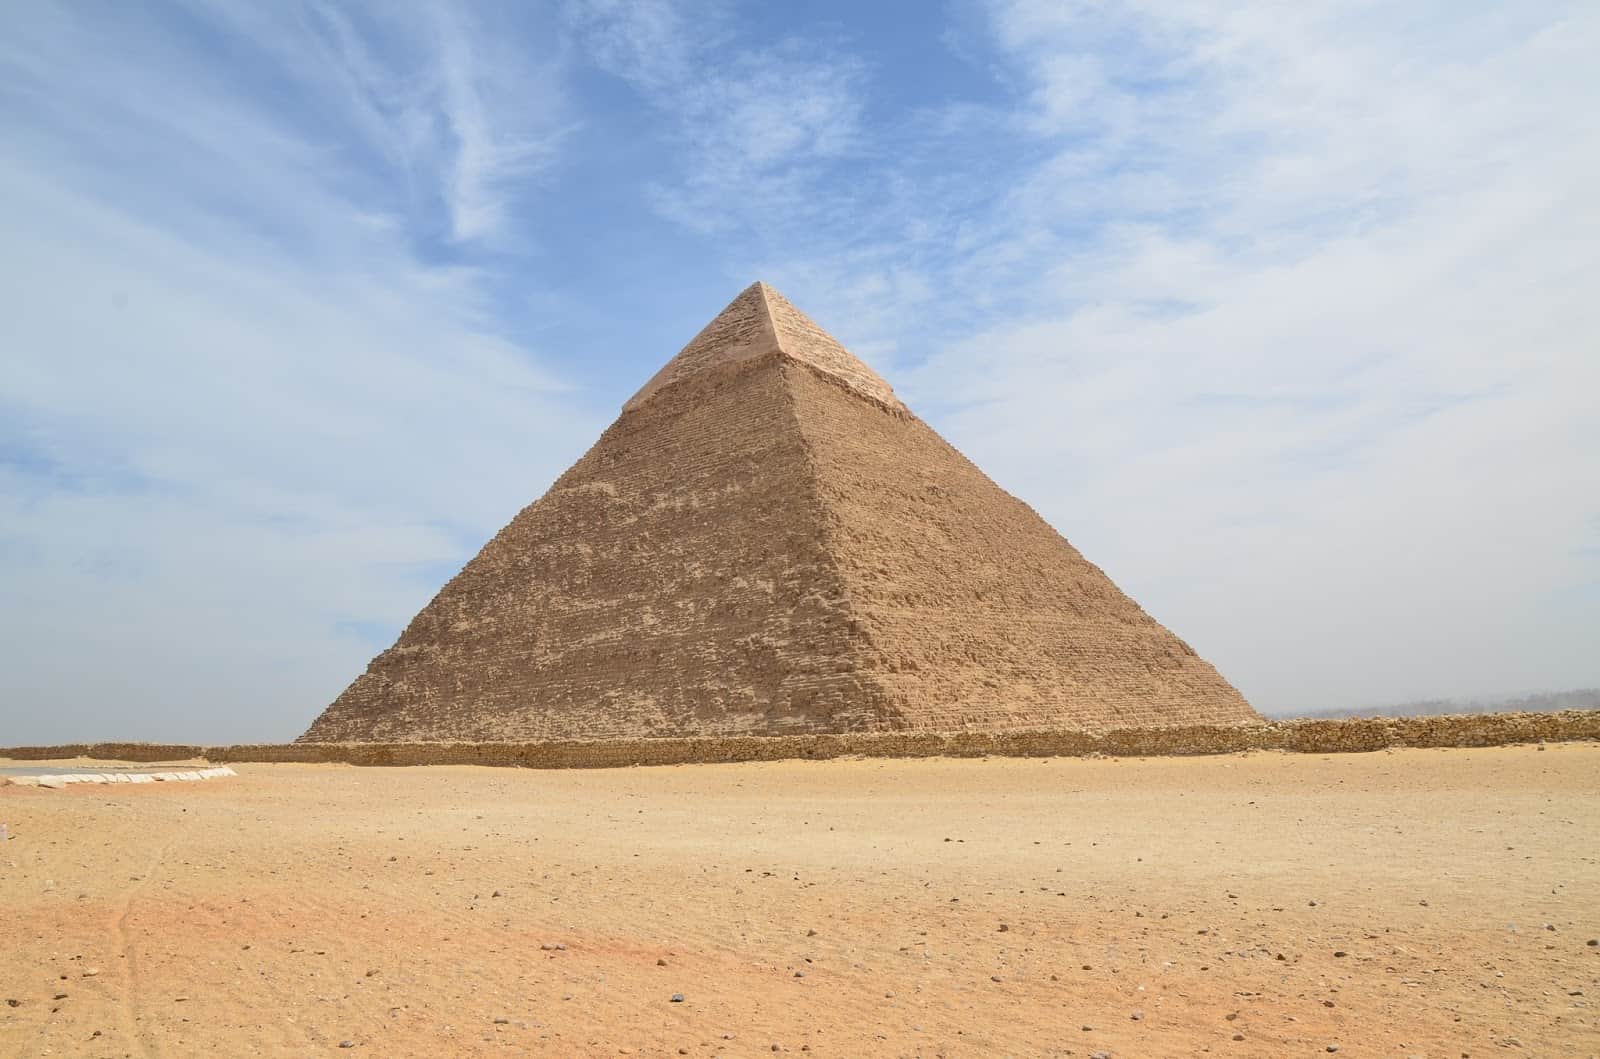 Pyramid of Khafre at the Pyramids of Giza in Egypt